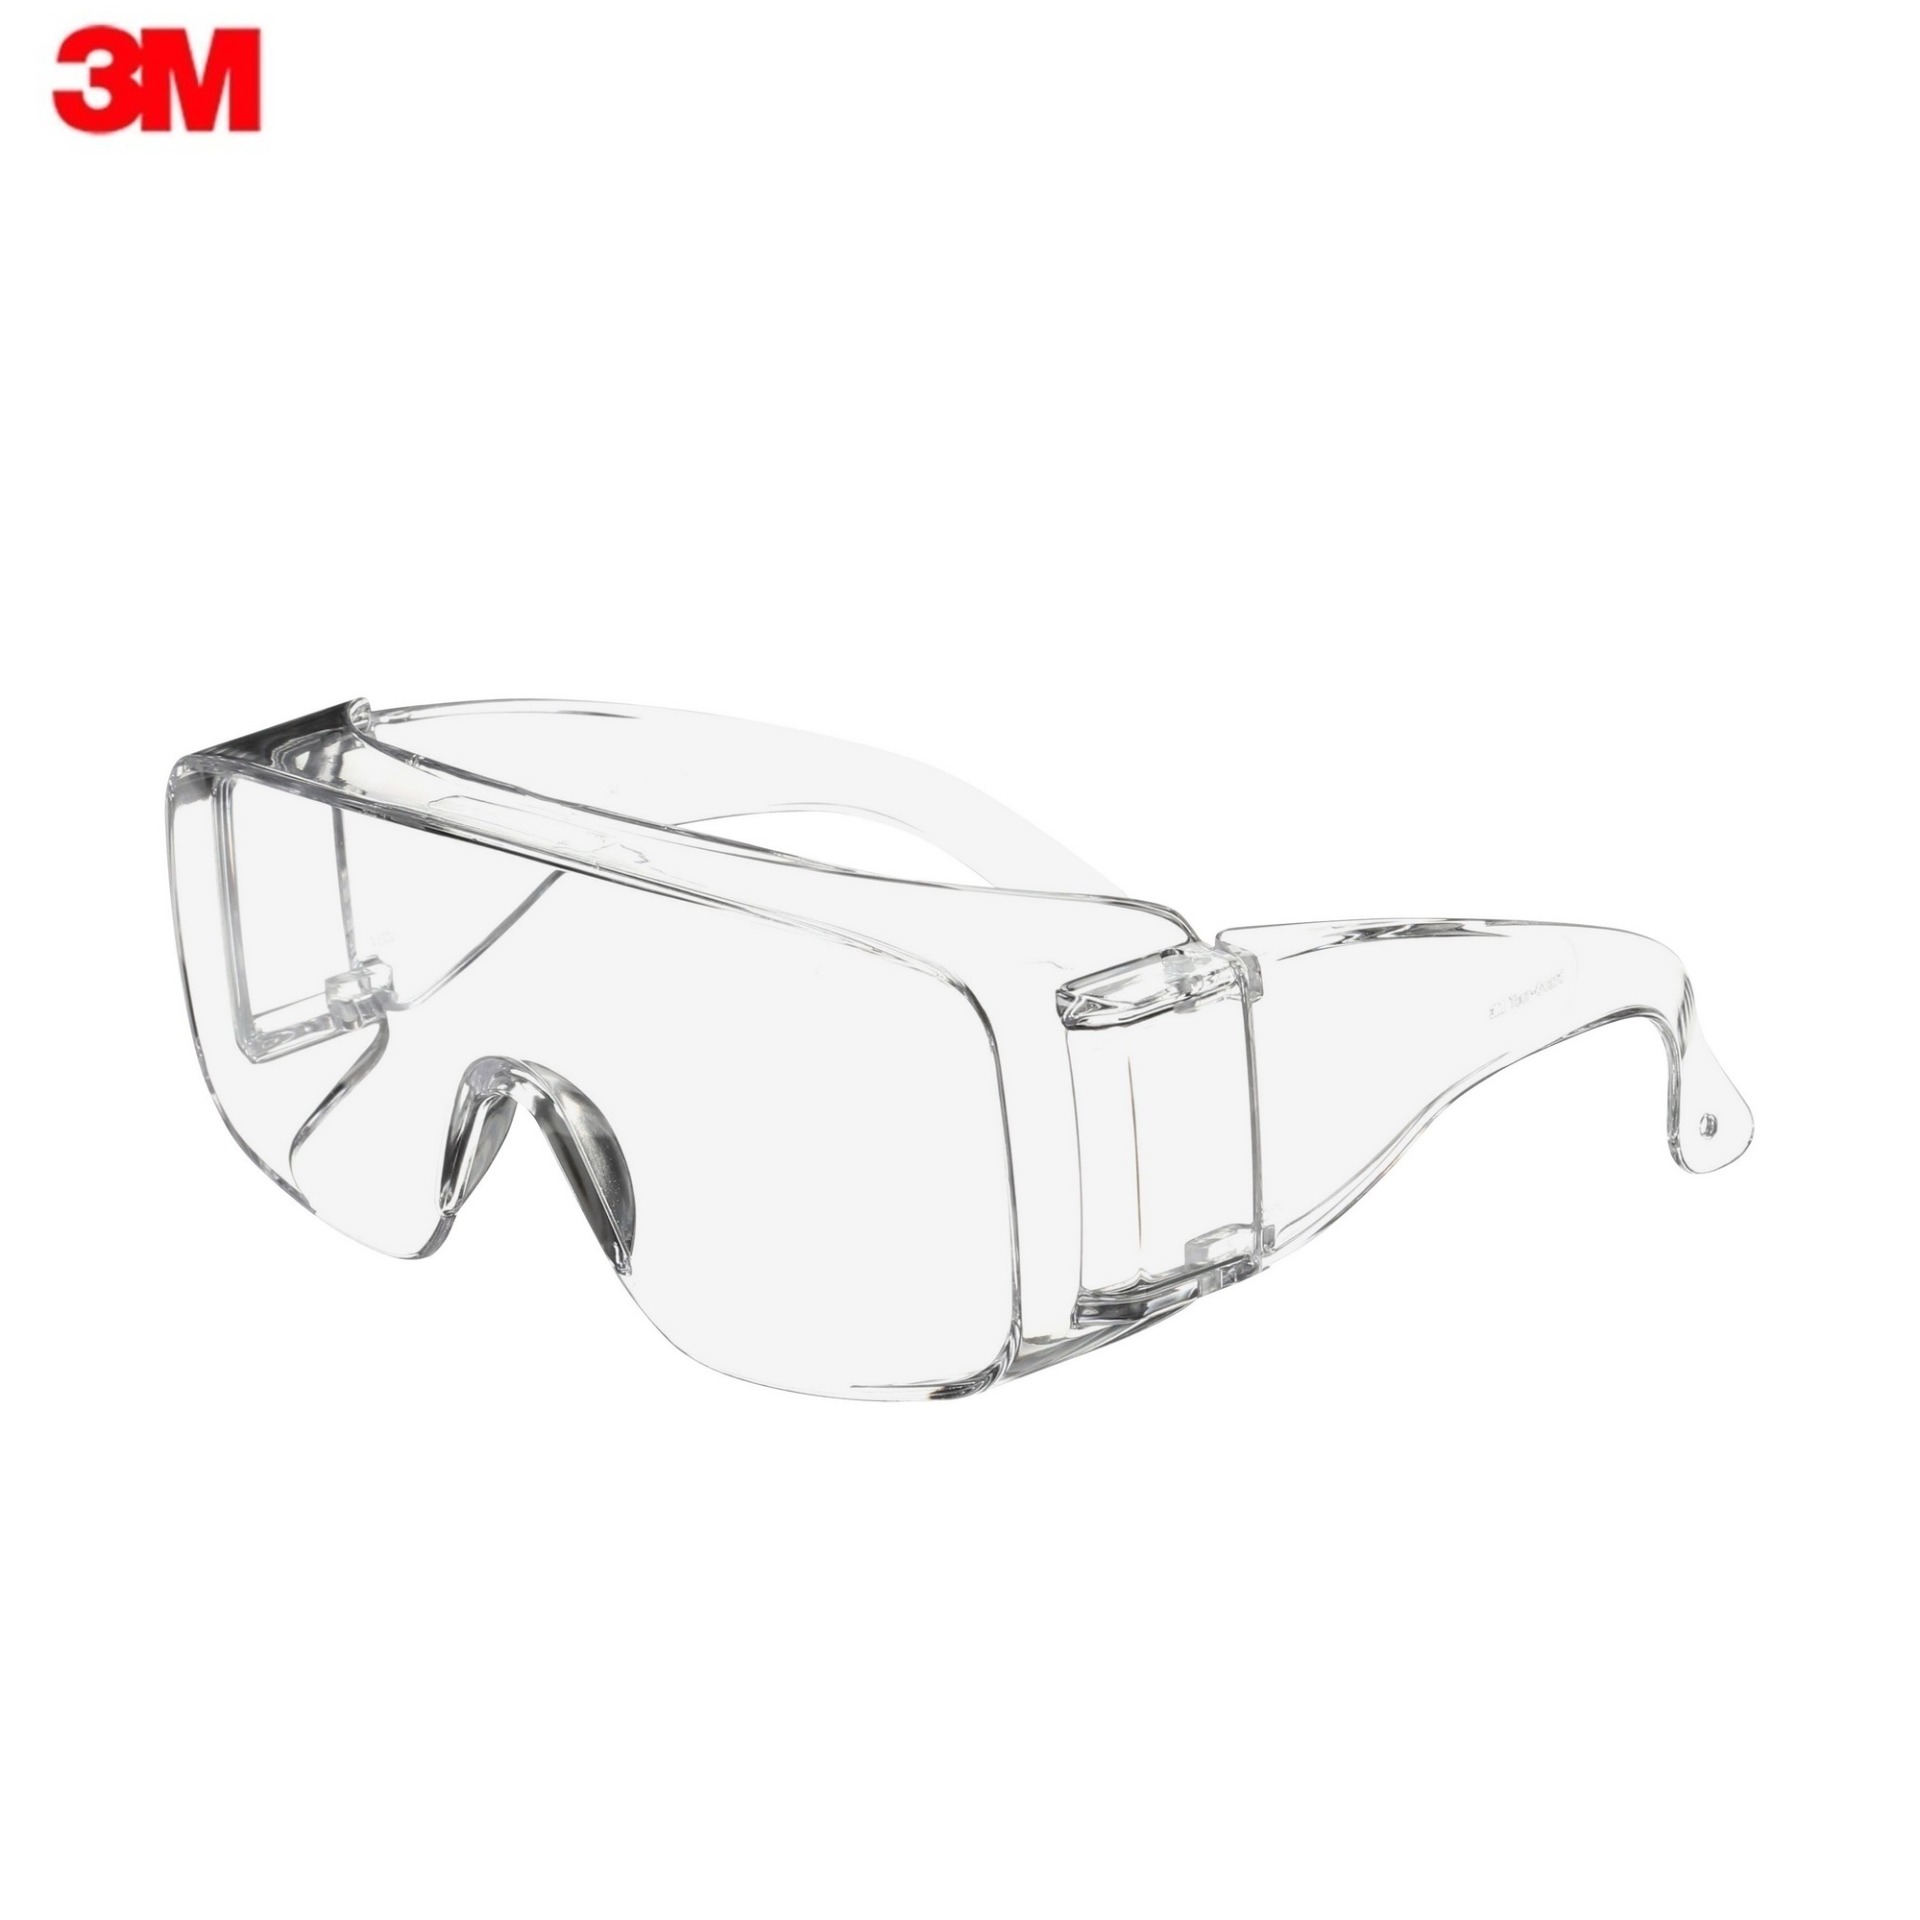 3M  Tour-Guard III Protective Eyewear 